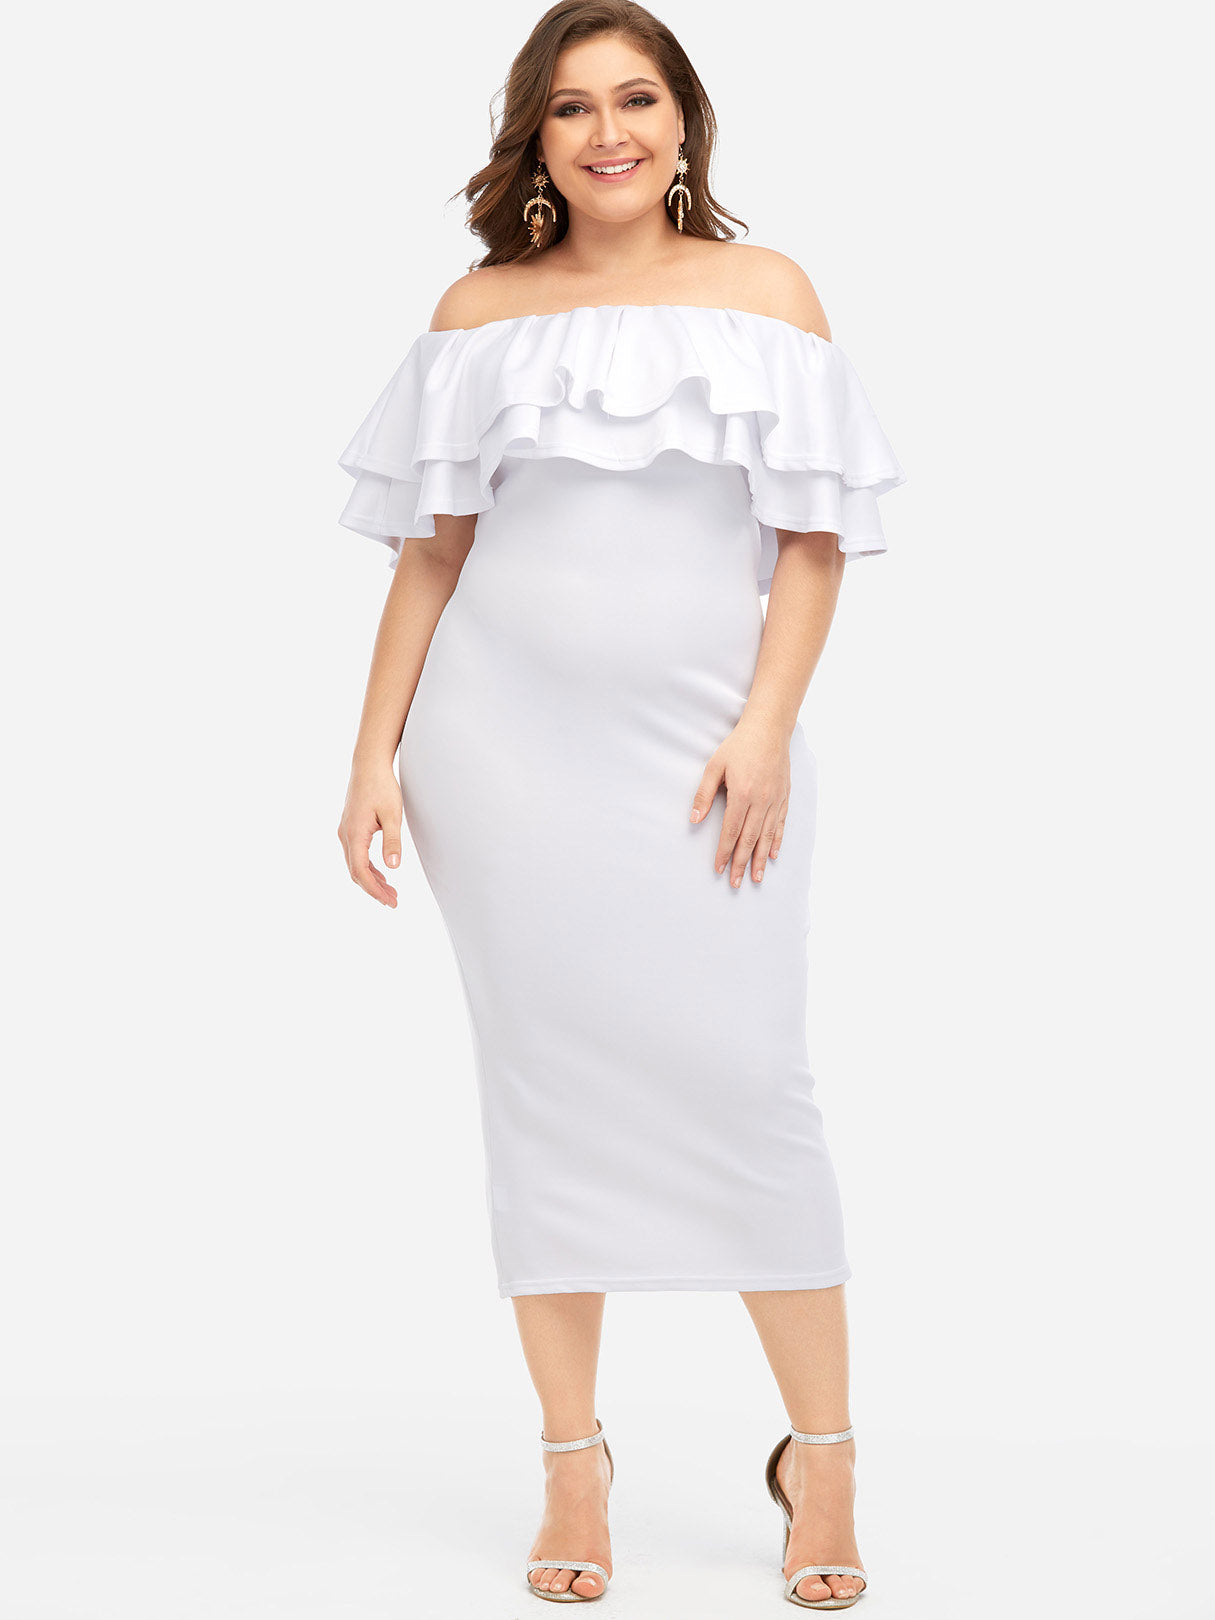 Custom Summer Maxi Dresses For Plus Size Women